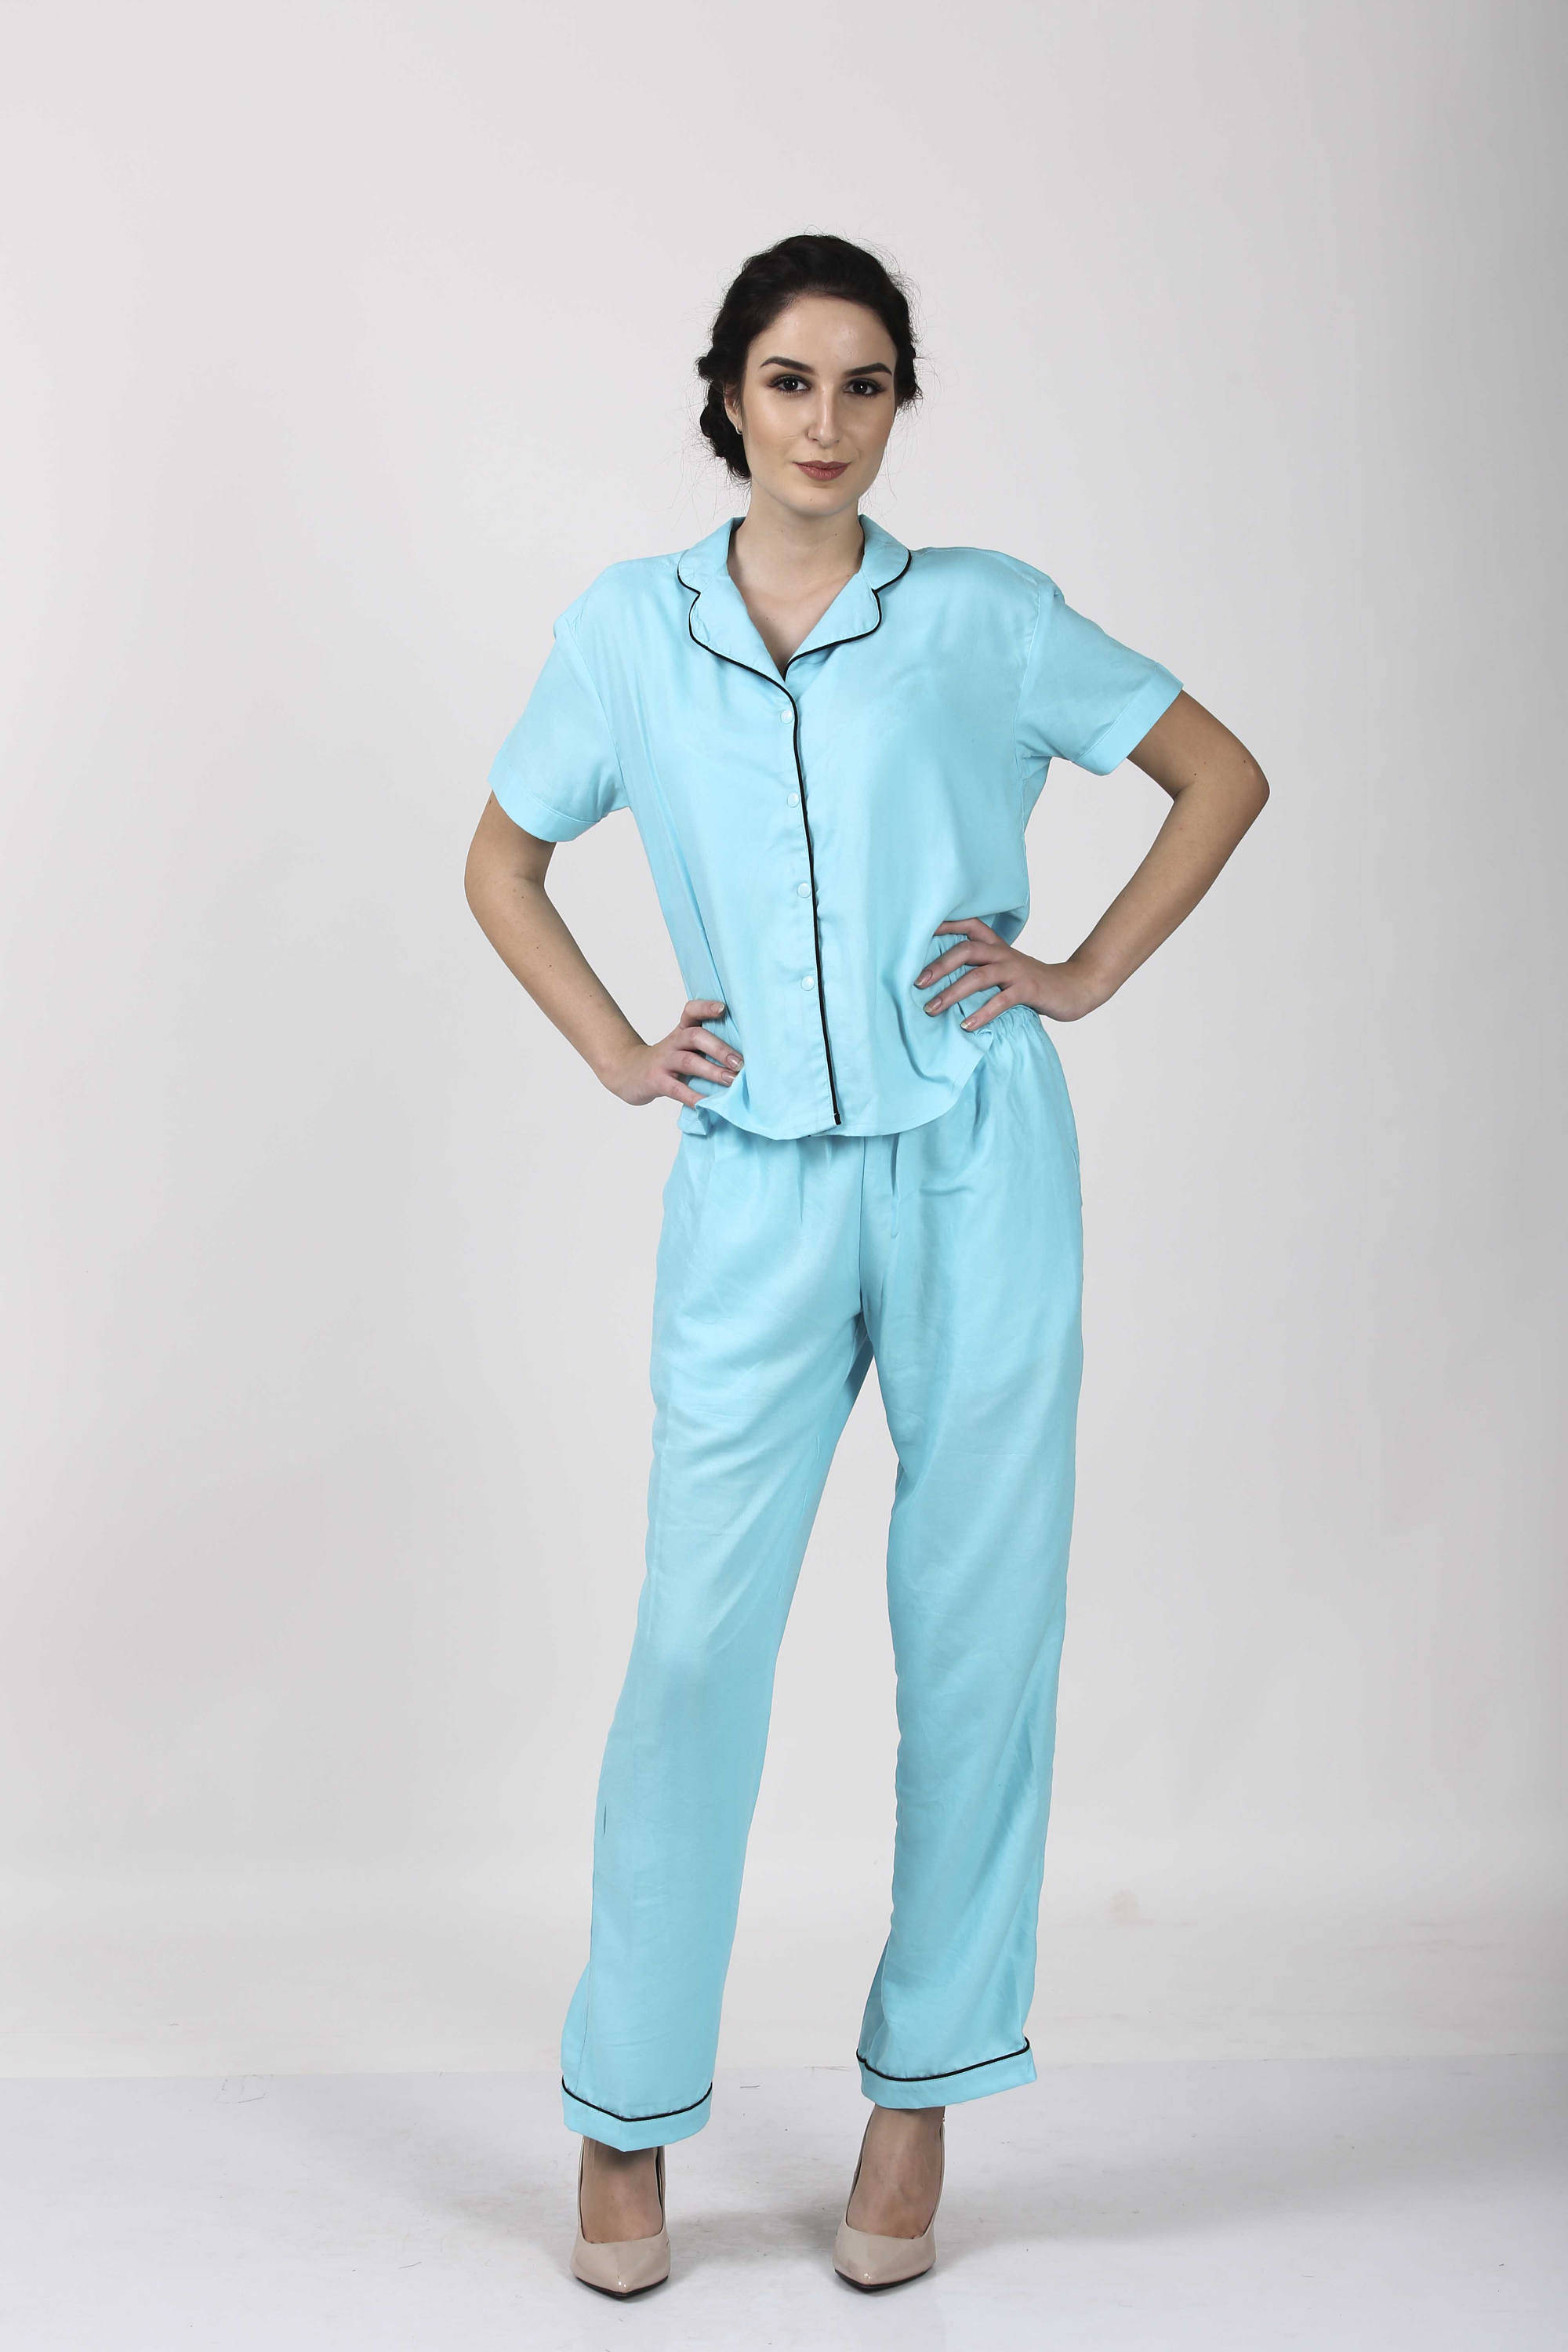 AQUA Pyjamas Sleep shirt Women Cotton Nightwear Long Sleeve | Etsy